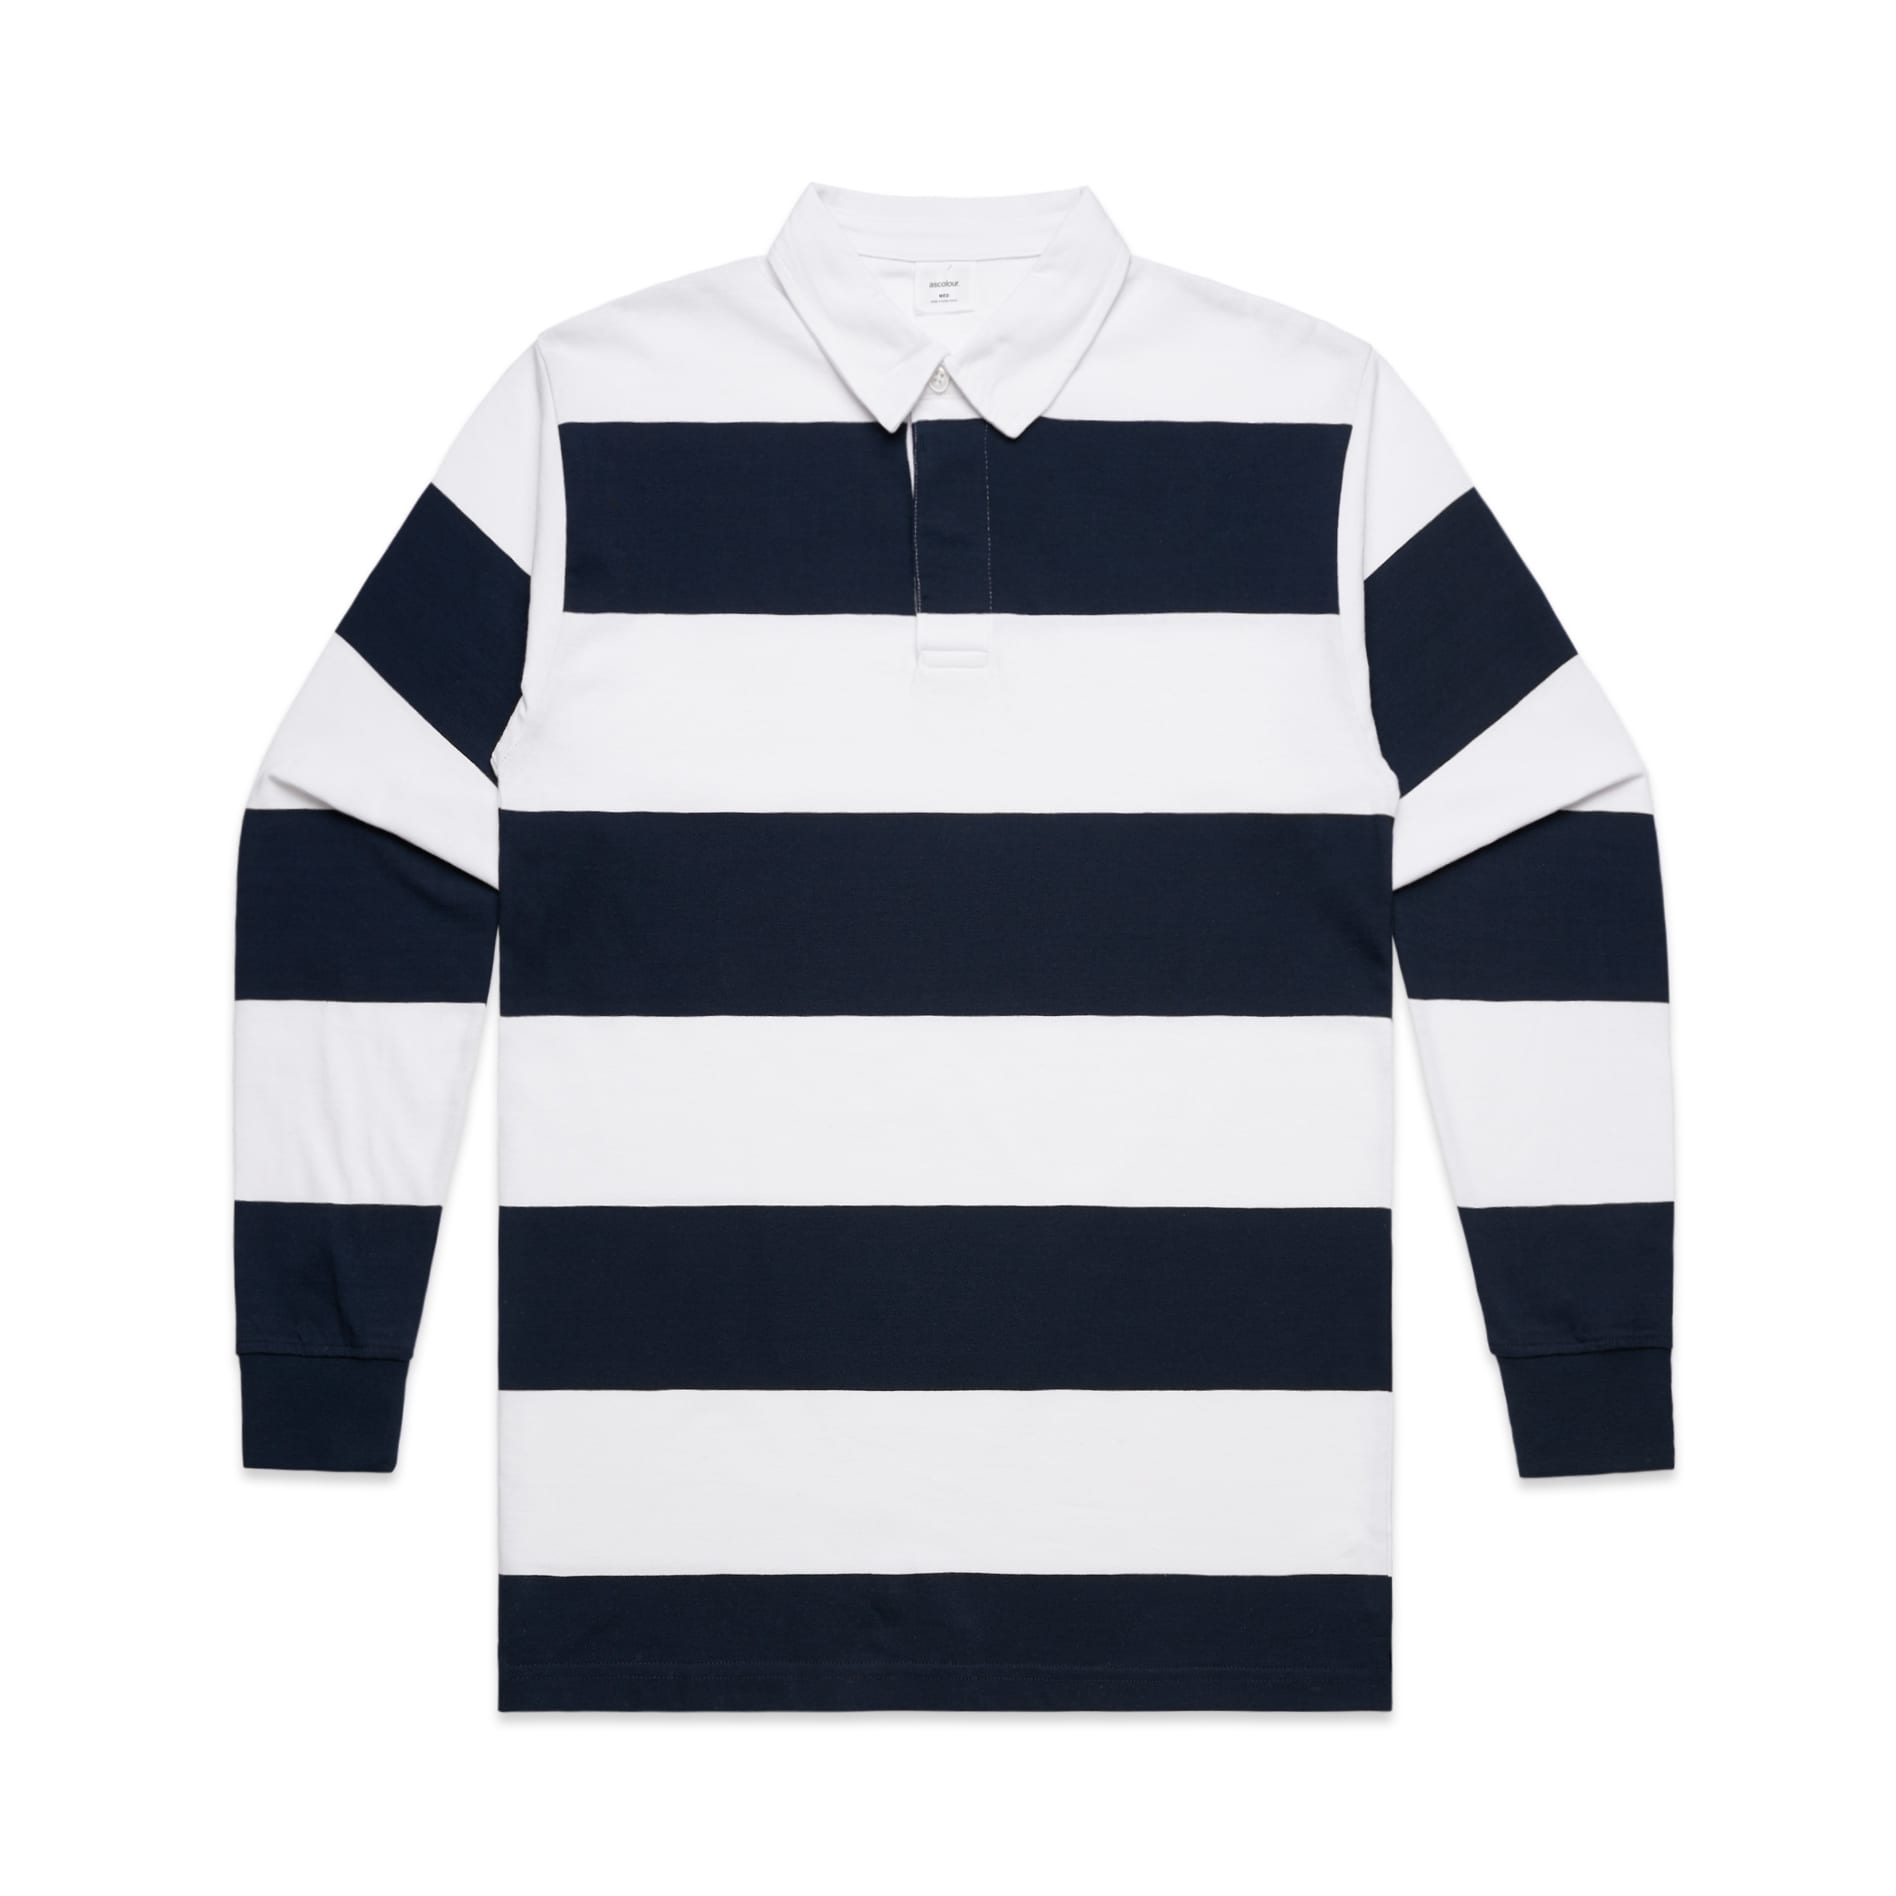 5416_rugby_stripe_white_navy.jpg